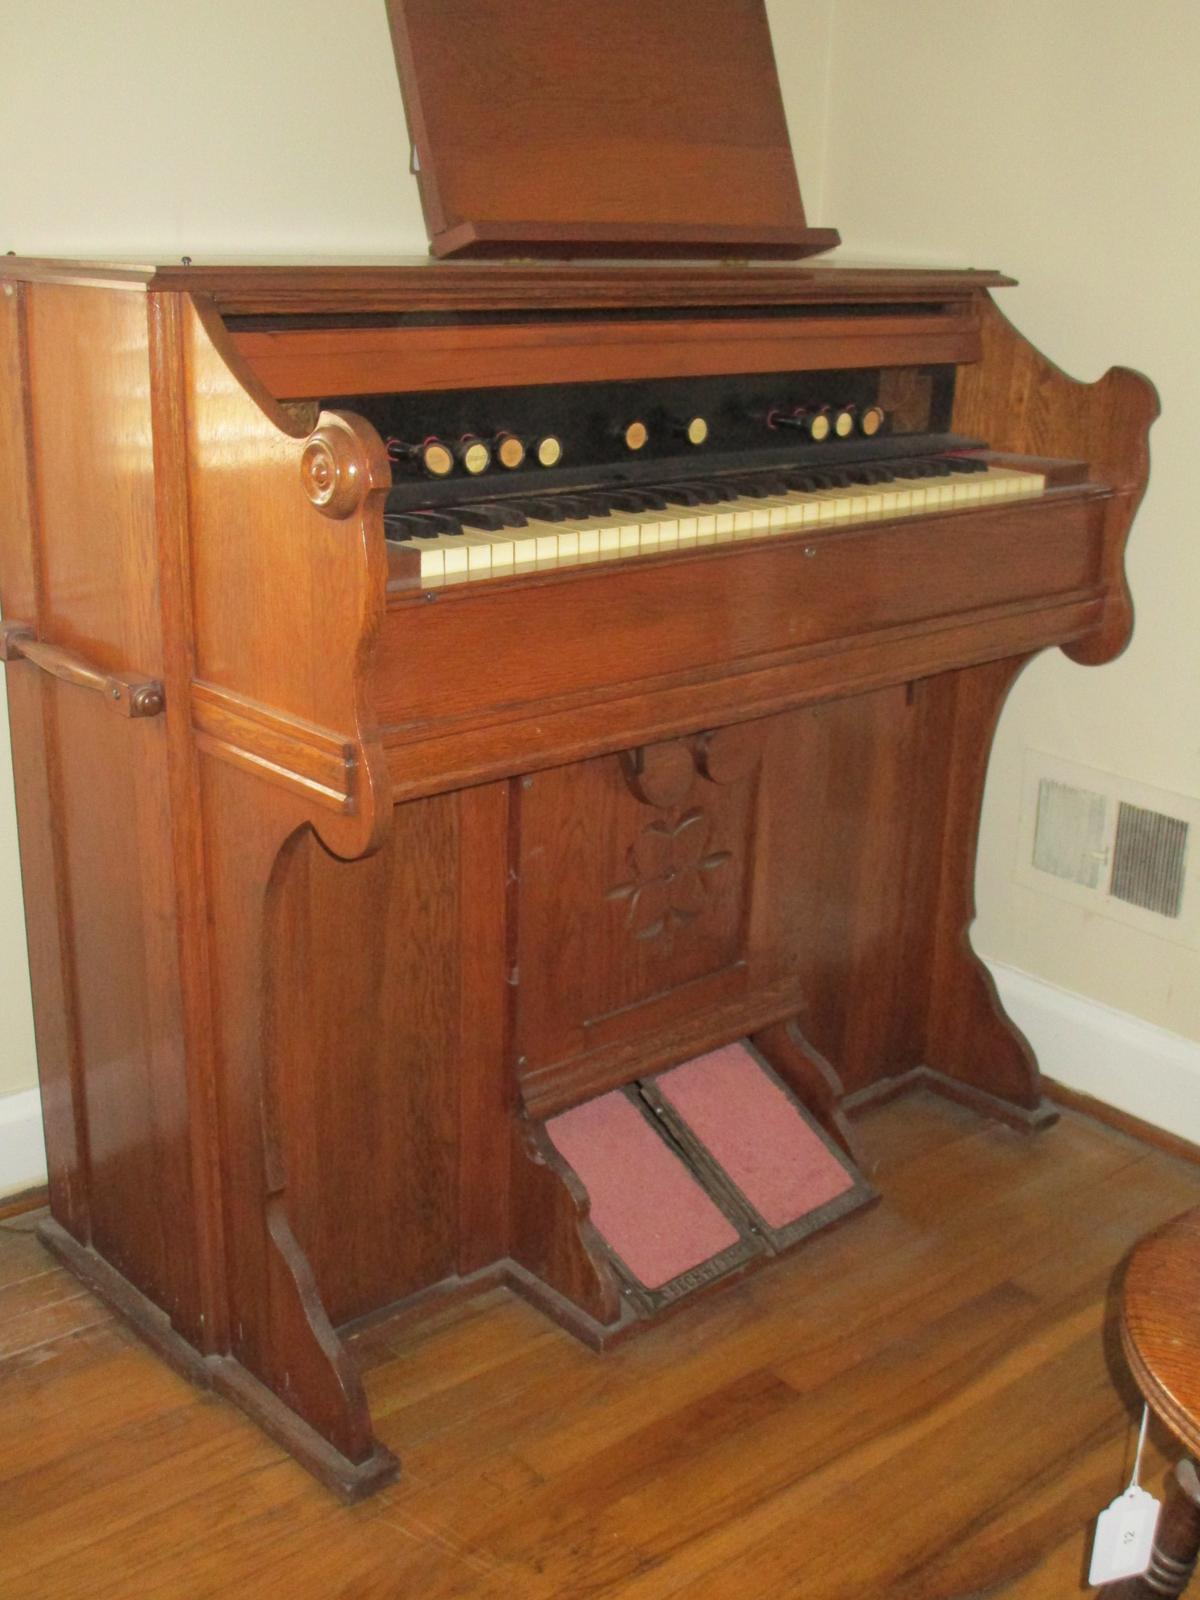 Beckwith Organ Company Vintage Oak Pump Organ - Beautiful Piece